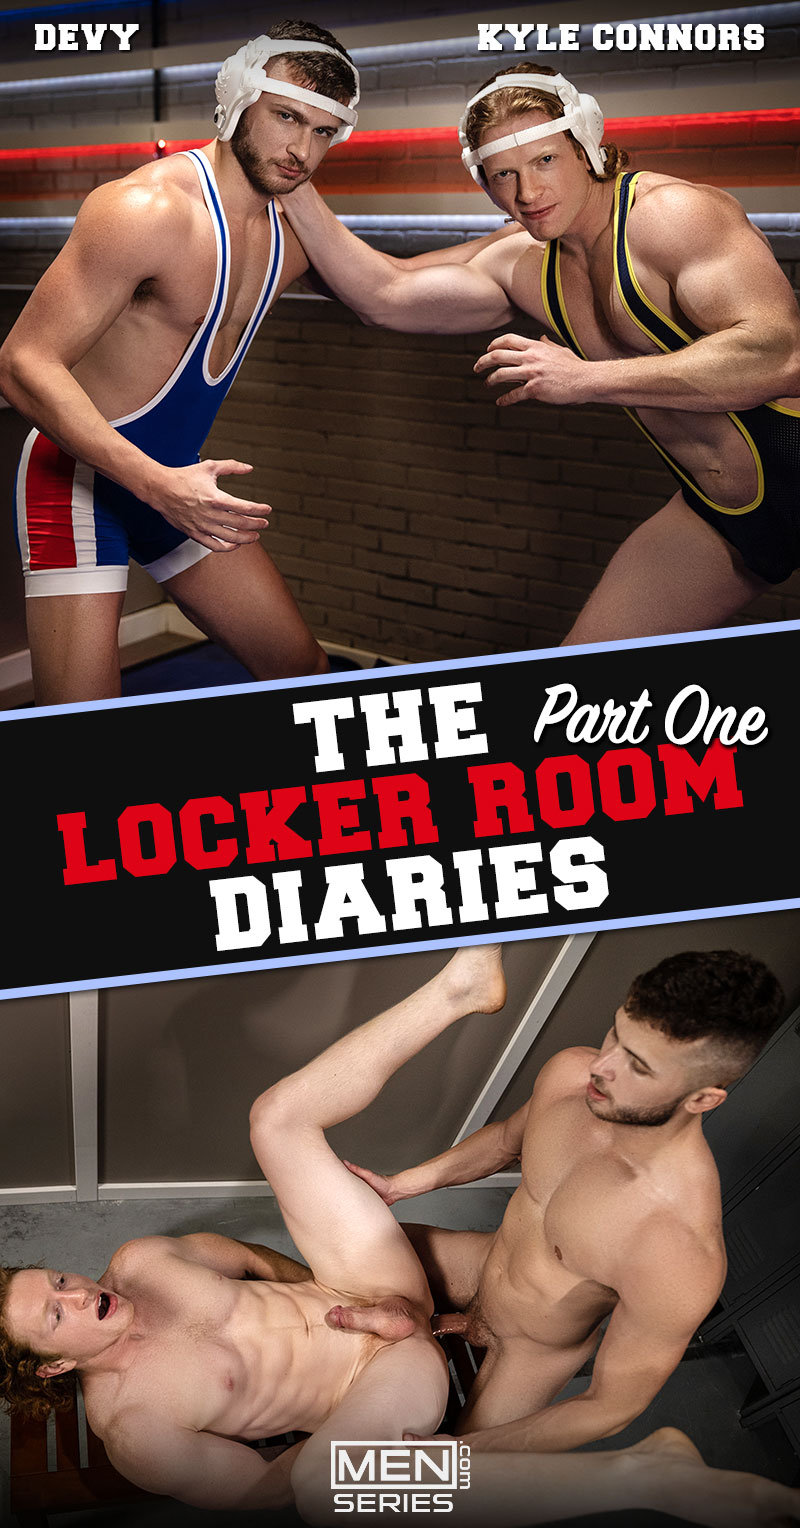 Kyle Connors Devy The Locker Room Diaries Men